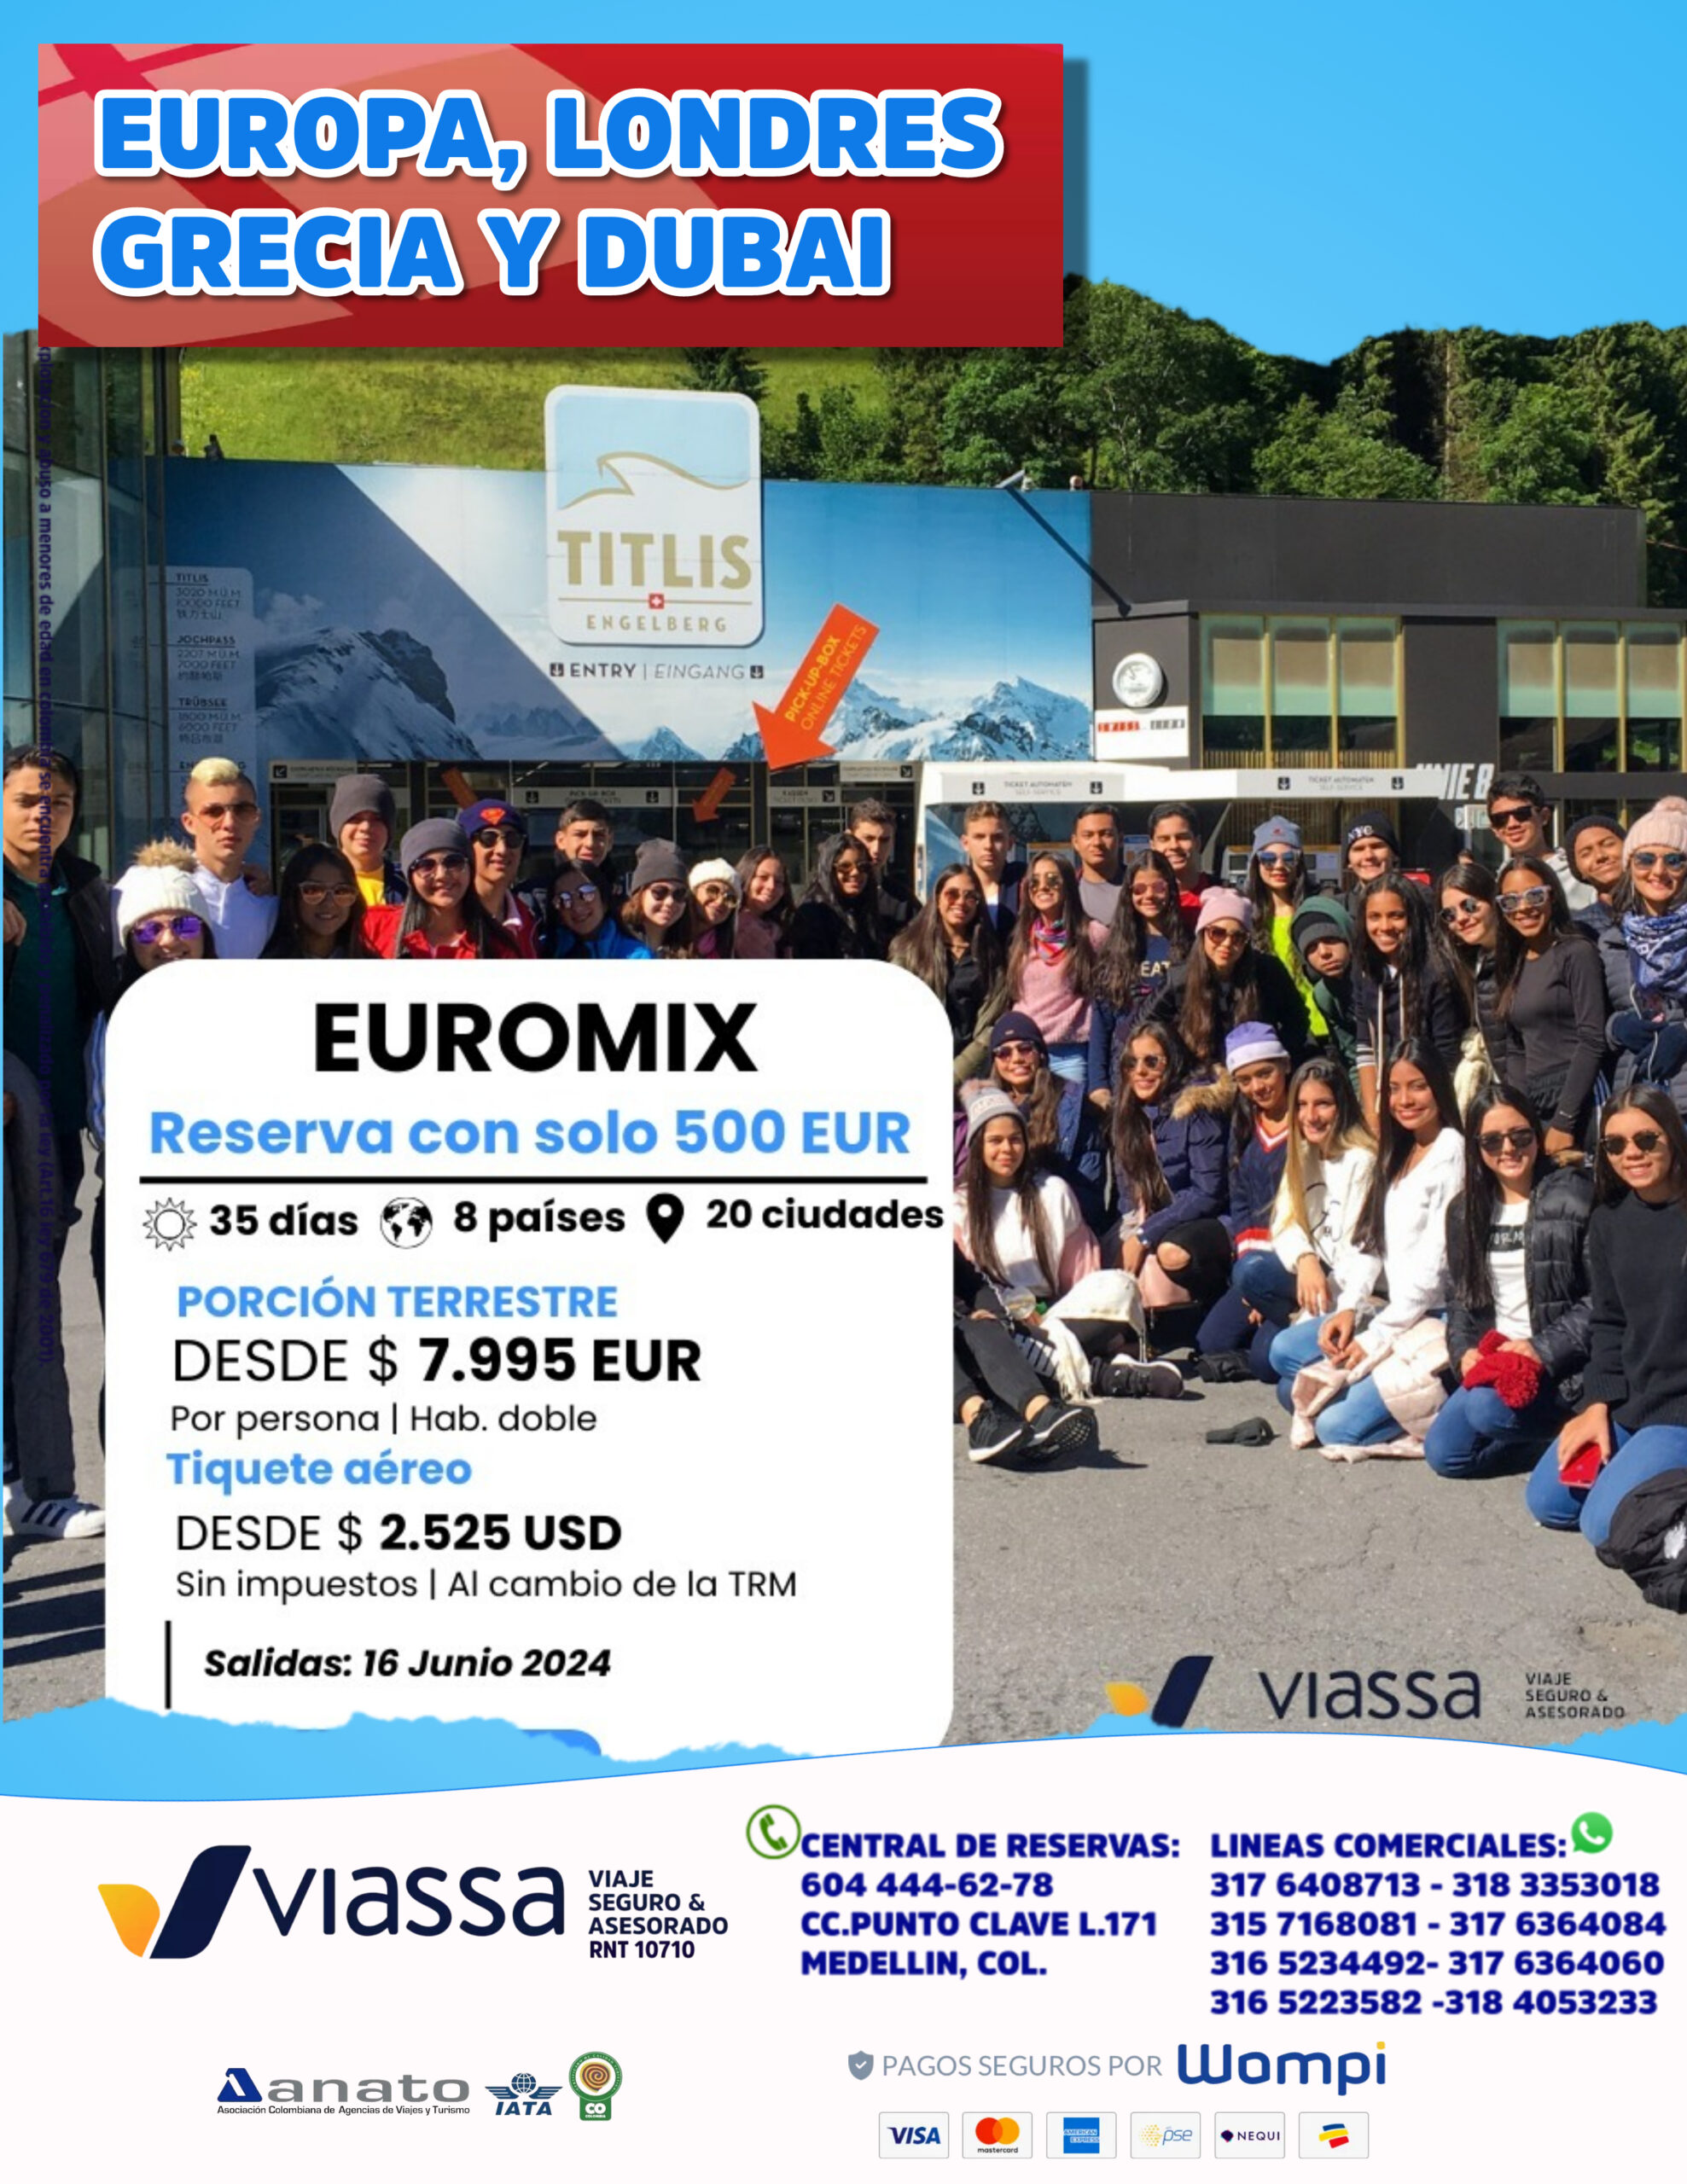 EUROPA-LONDRES-GRECIA Y DUBAI (EUROMIX)